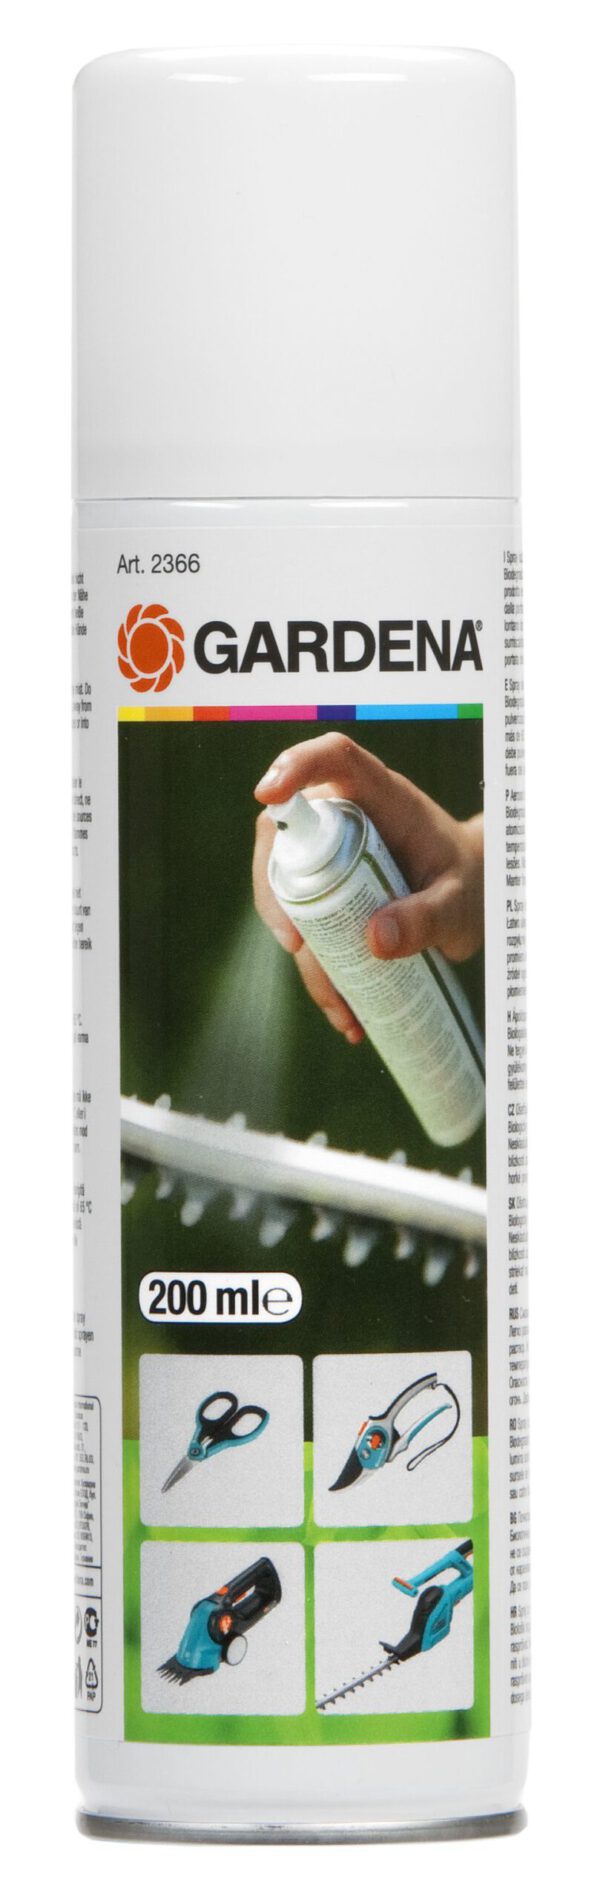 Gardena onderhoudsspray 200 ml 02366-20